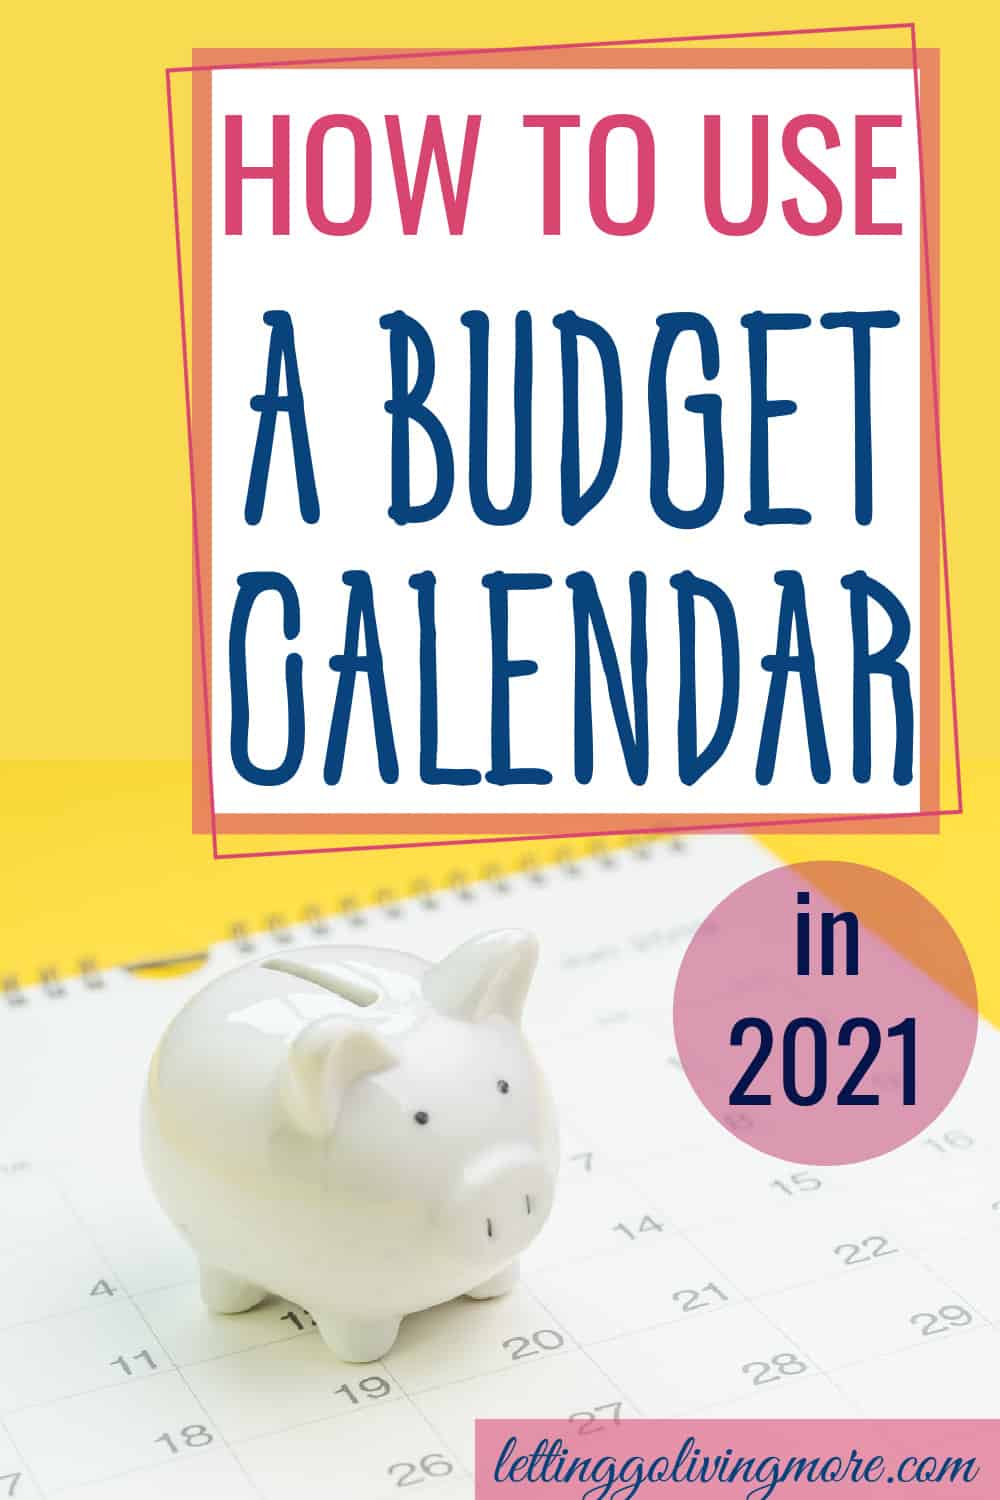 2021 bugeting calendar with piggy bank 